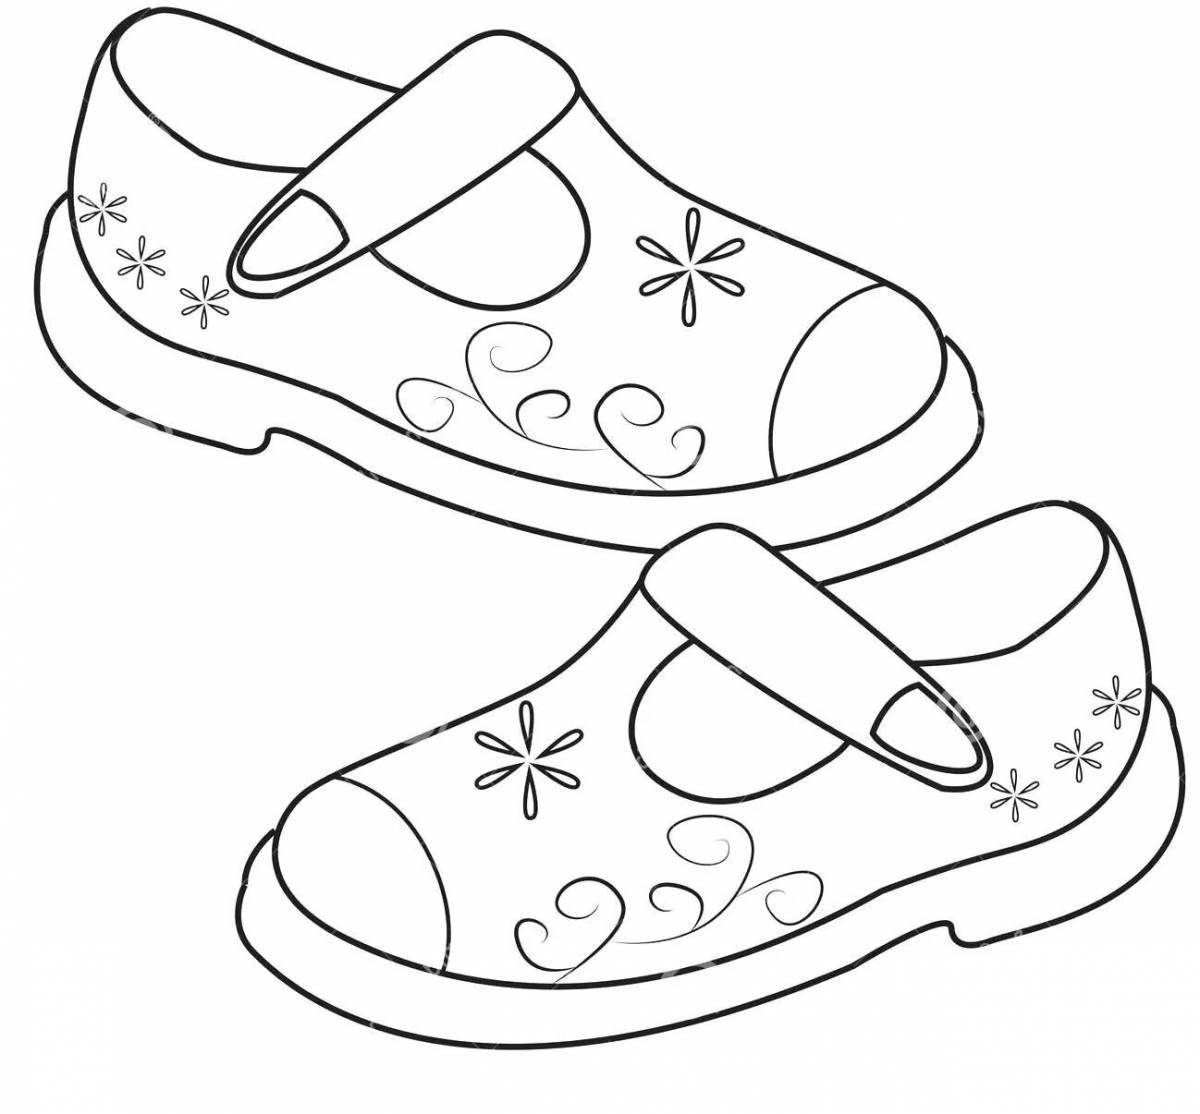 Fine sandals coloring page